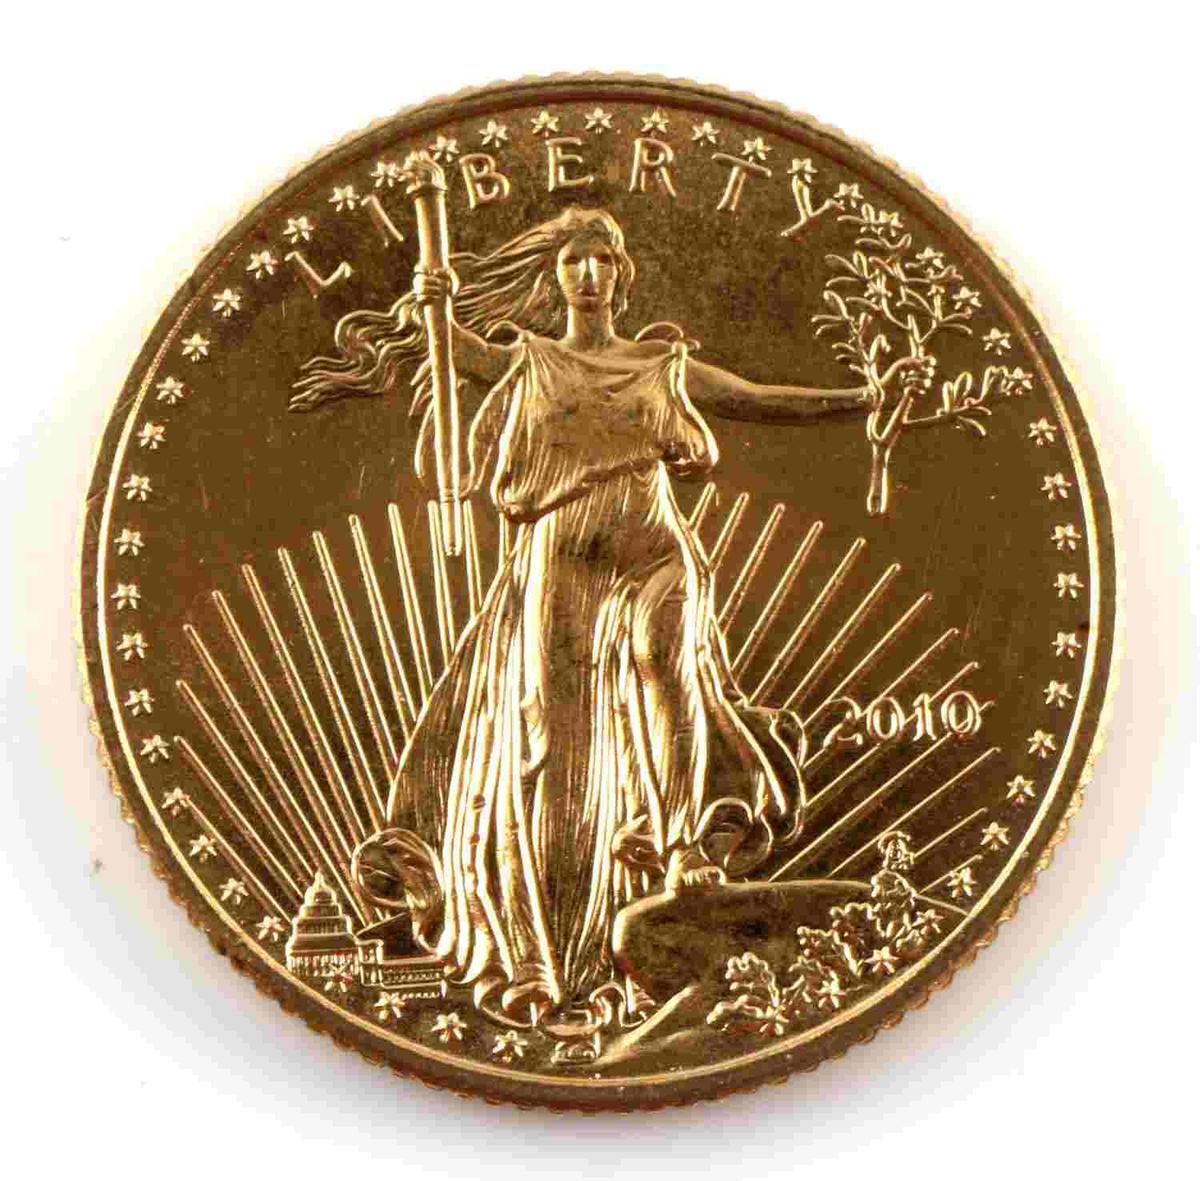 1/10TH OUNCE GOLD AMERICAN EAGLE COIN 2010 BU